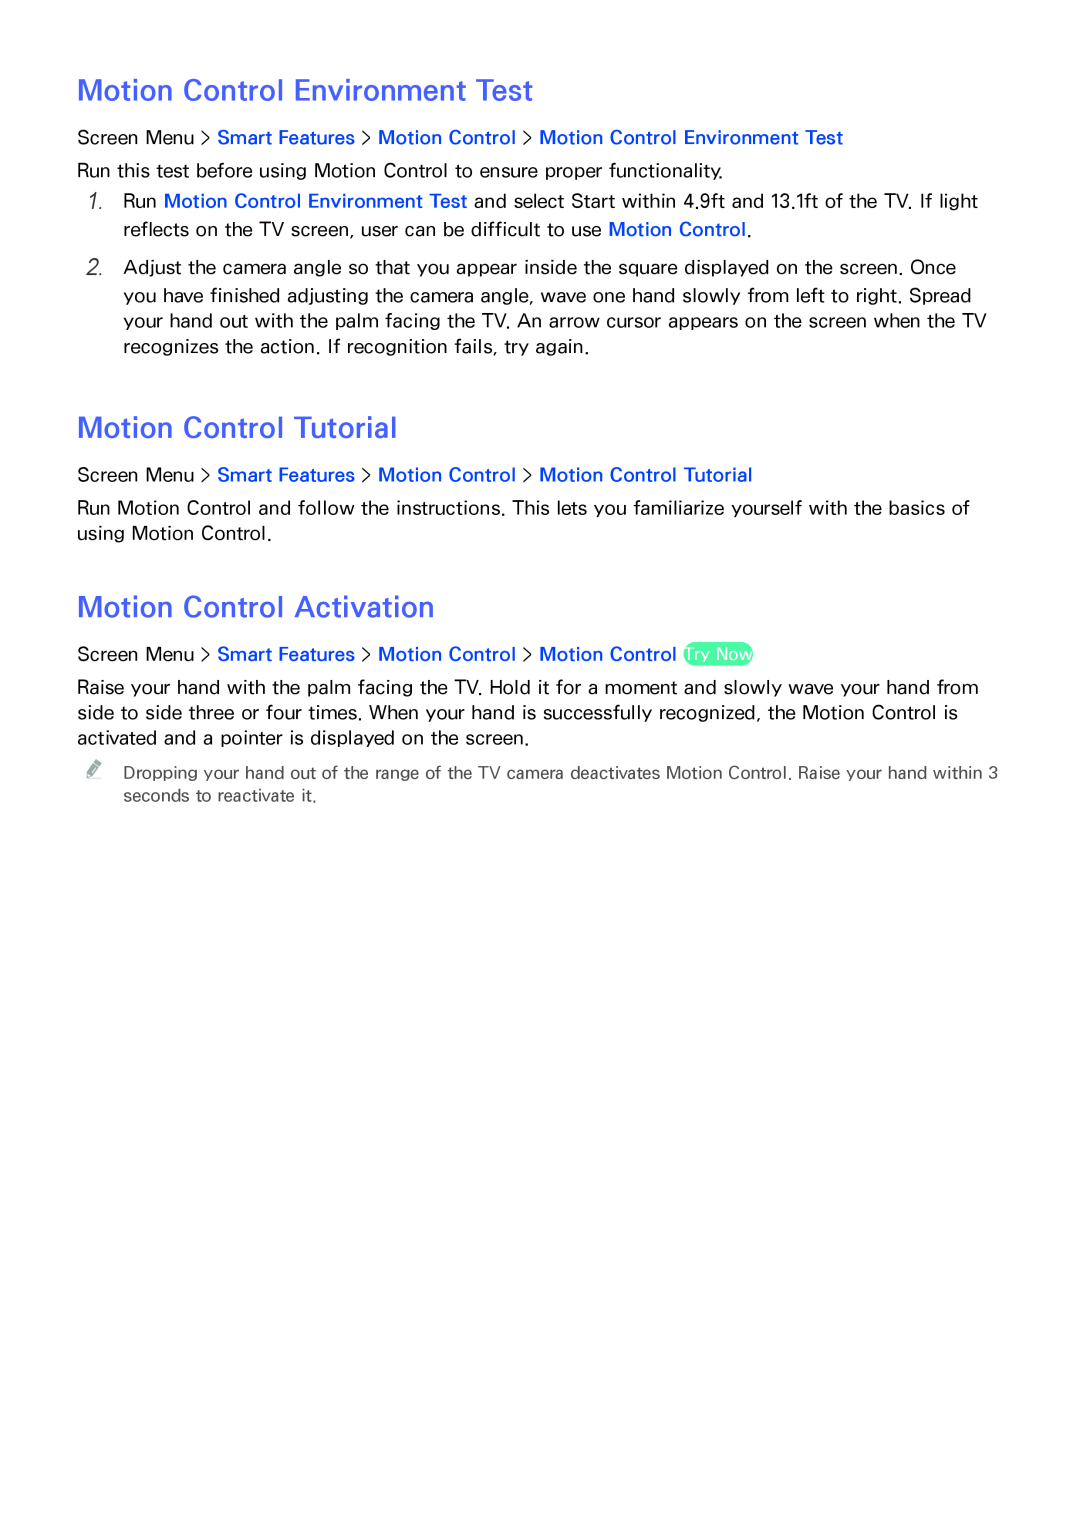 Samsung SEK-1000 manual Motion Control Environment Test, Motion Control Tutorial, Motion Control Activation 